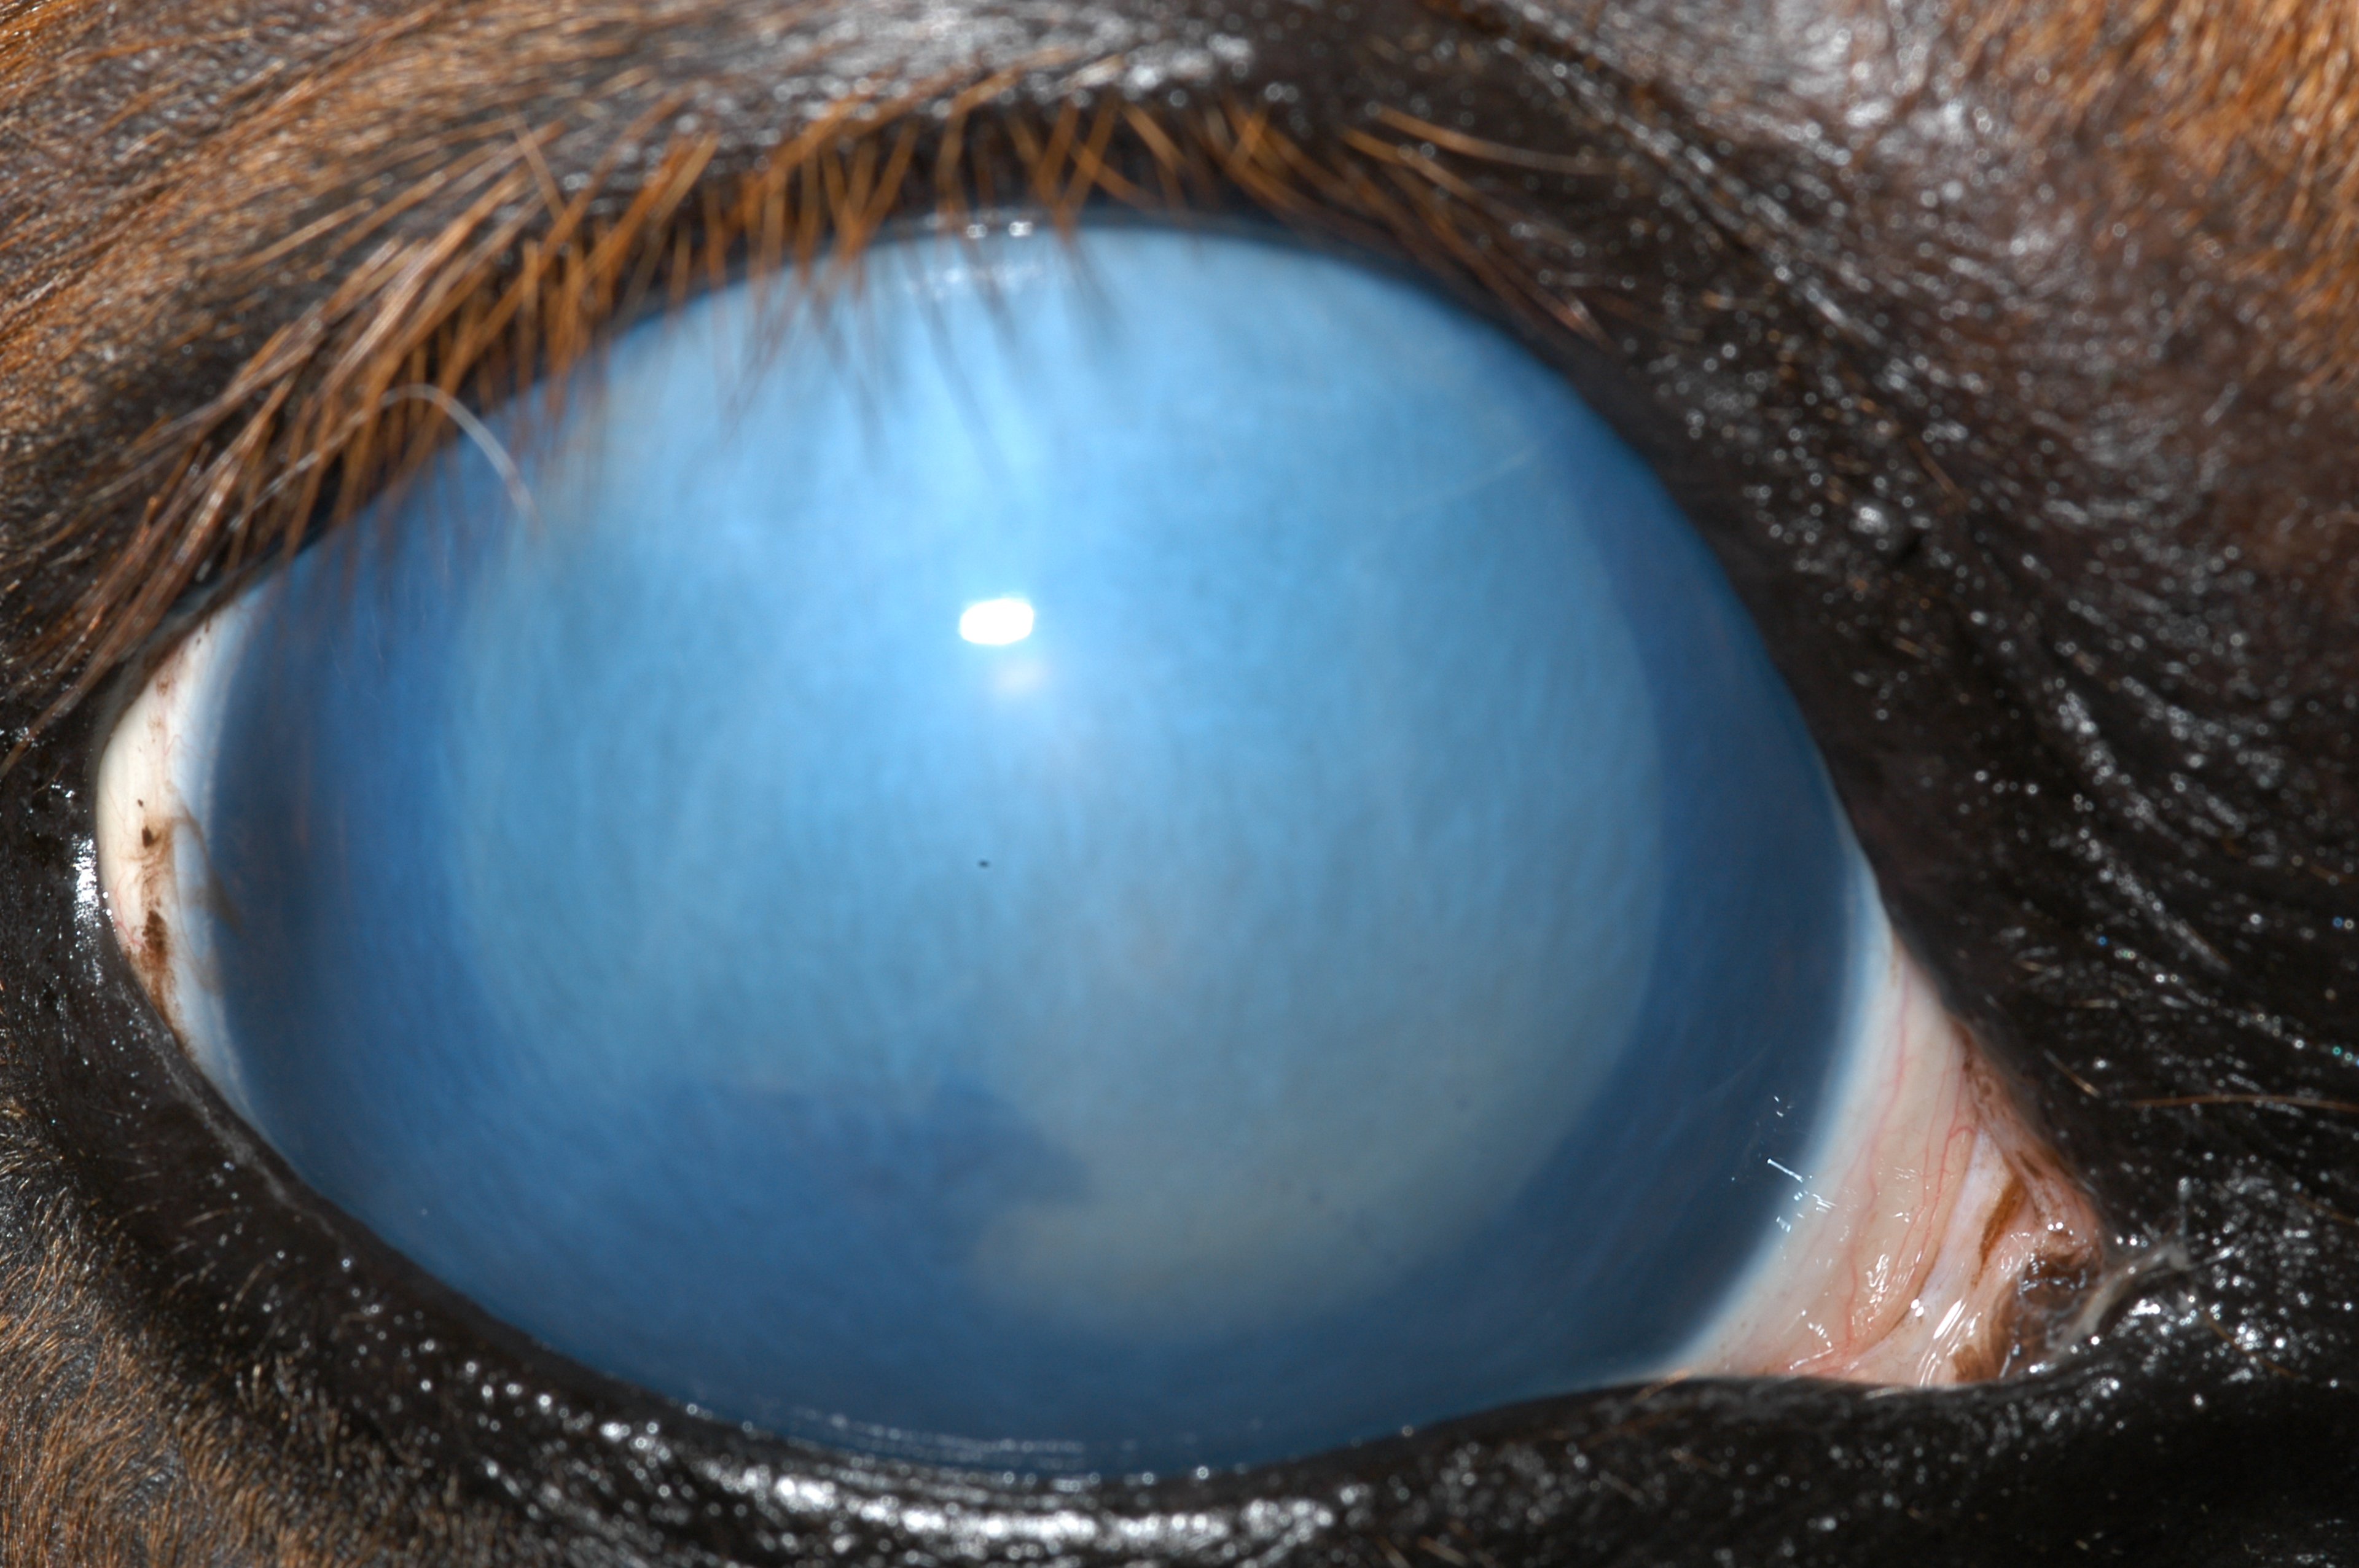 Secondary glaucoma due to chronic anterior uveitis, horse